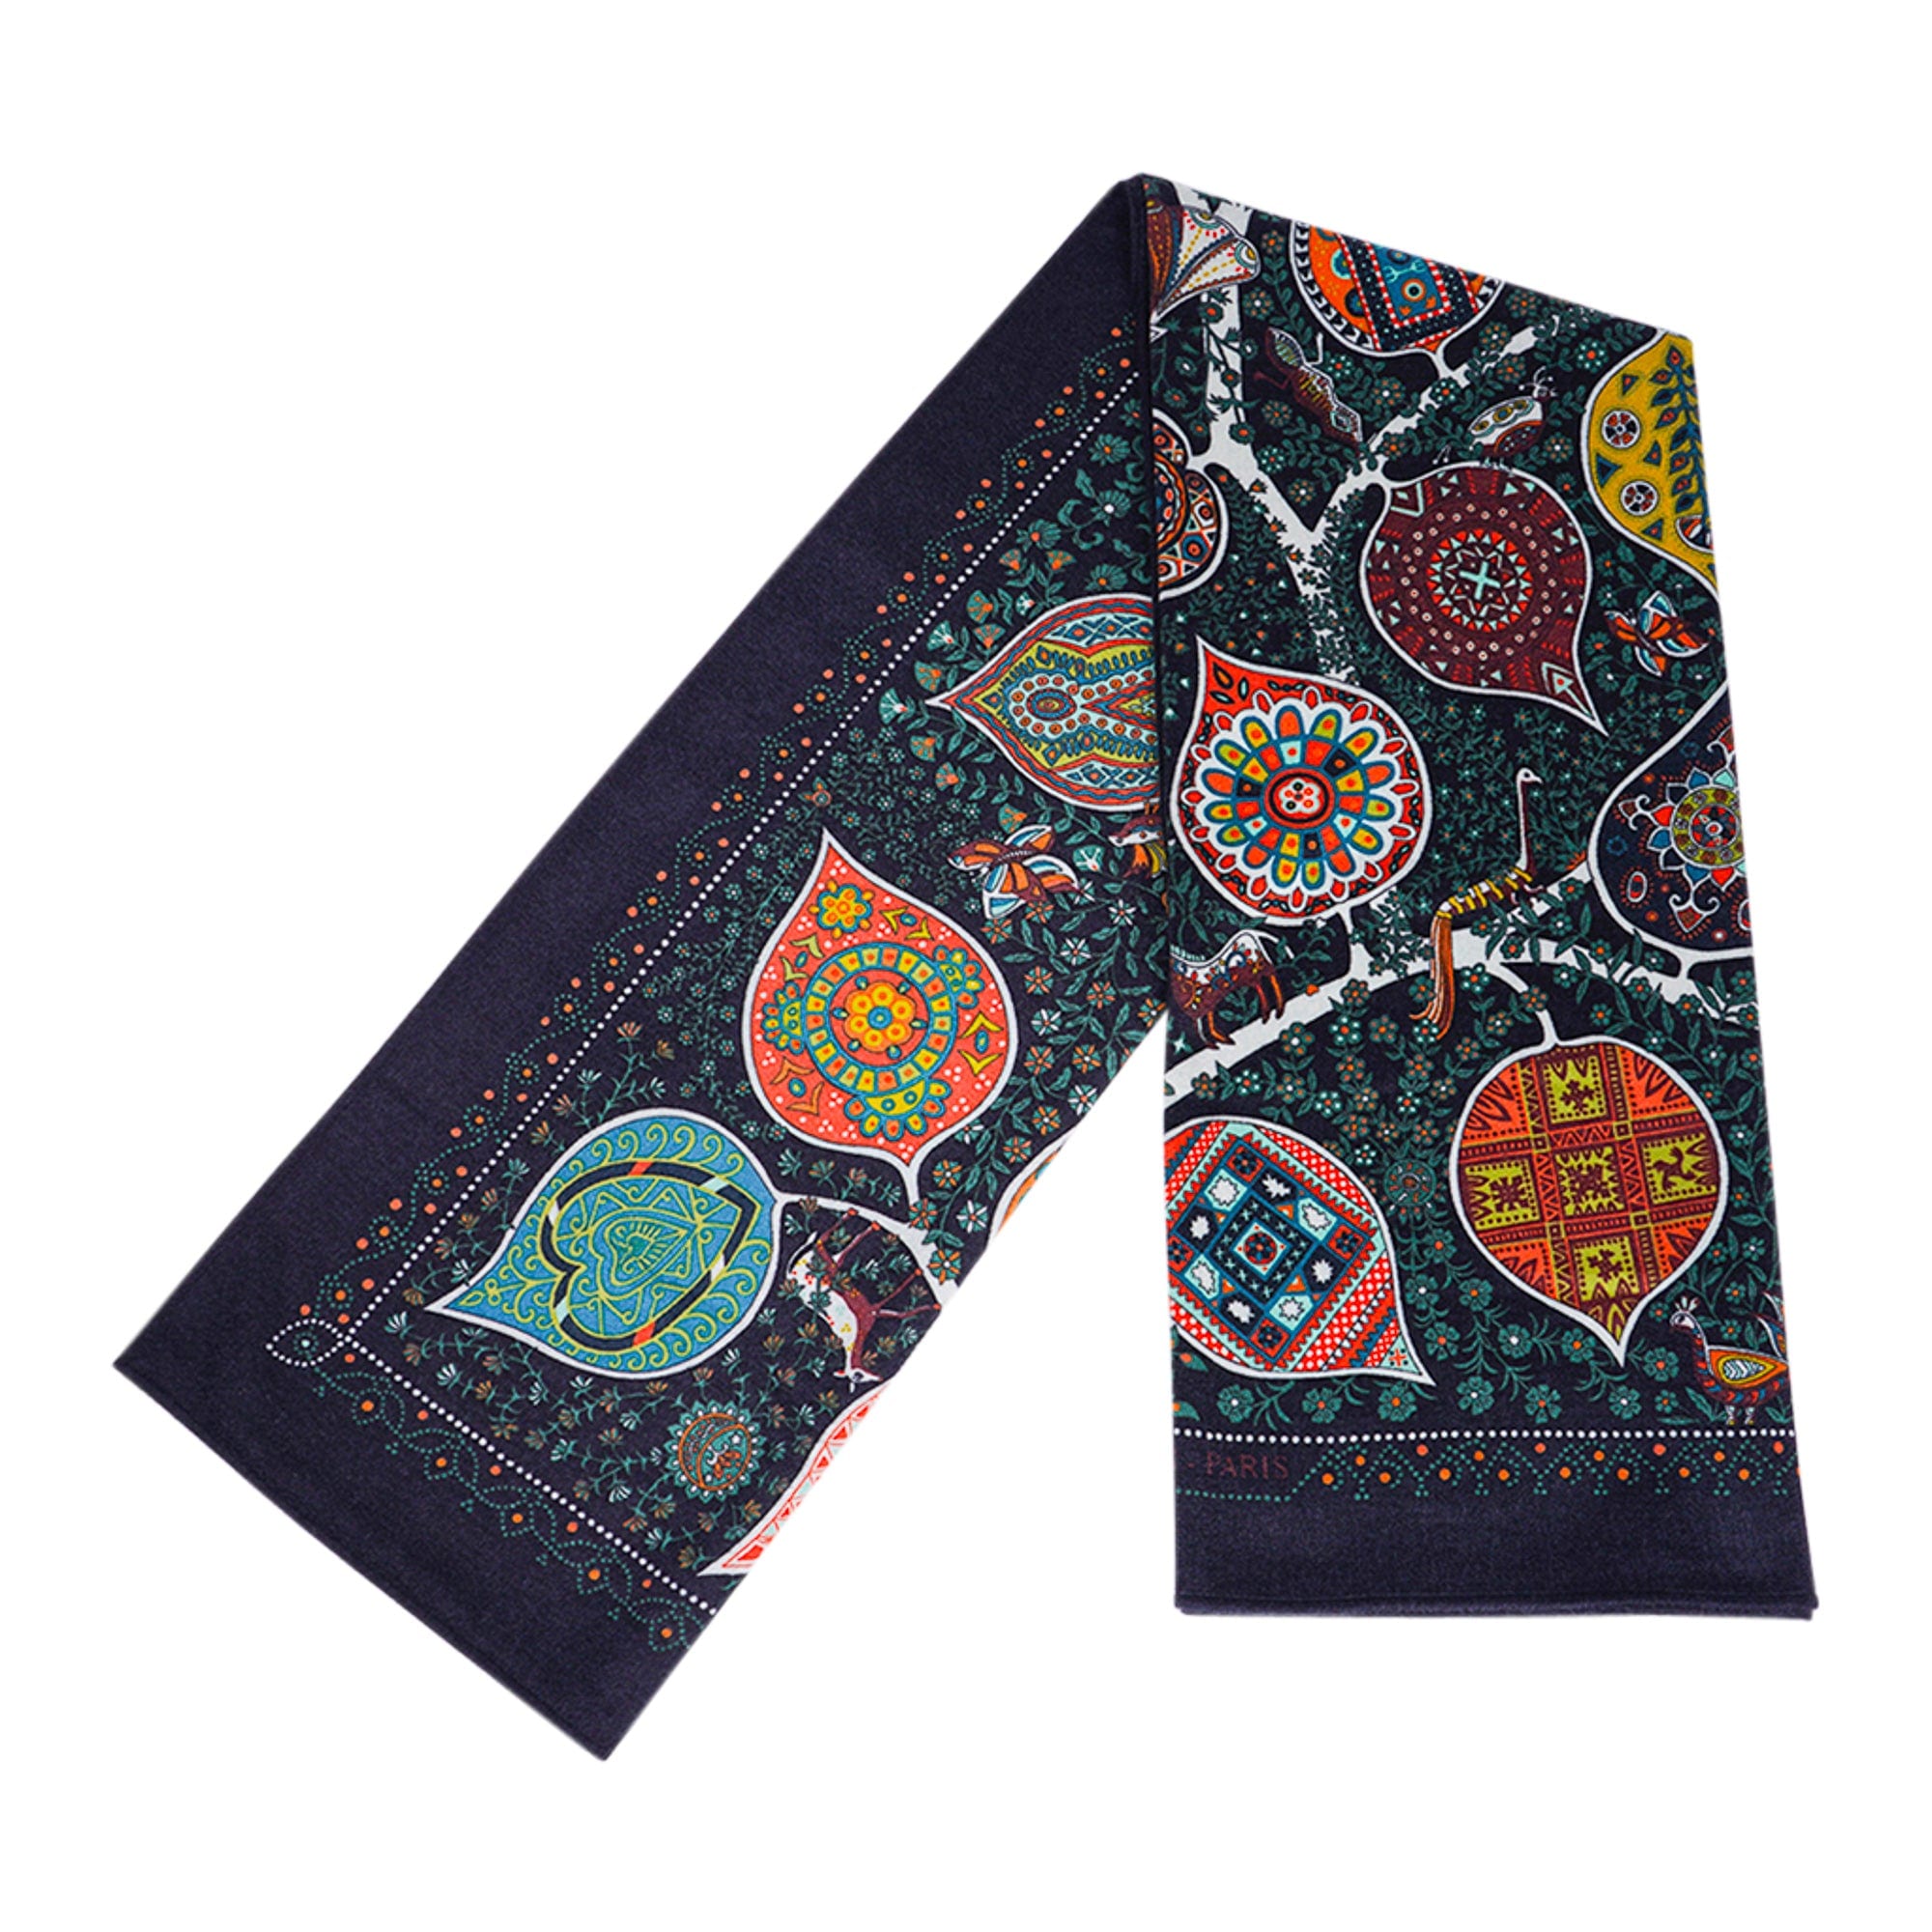 Hermes Blanket Tree of Life Blanket Multicolored Cashmere / Silk